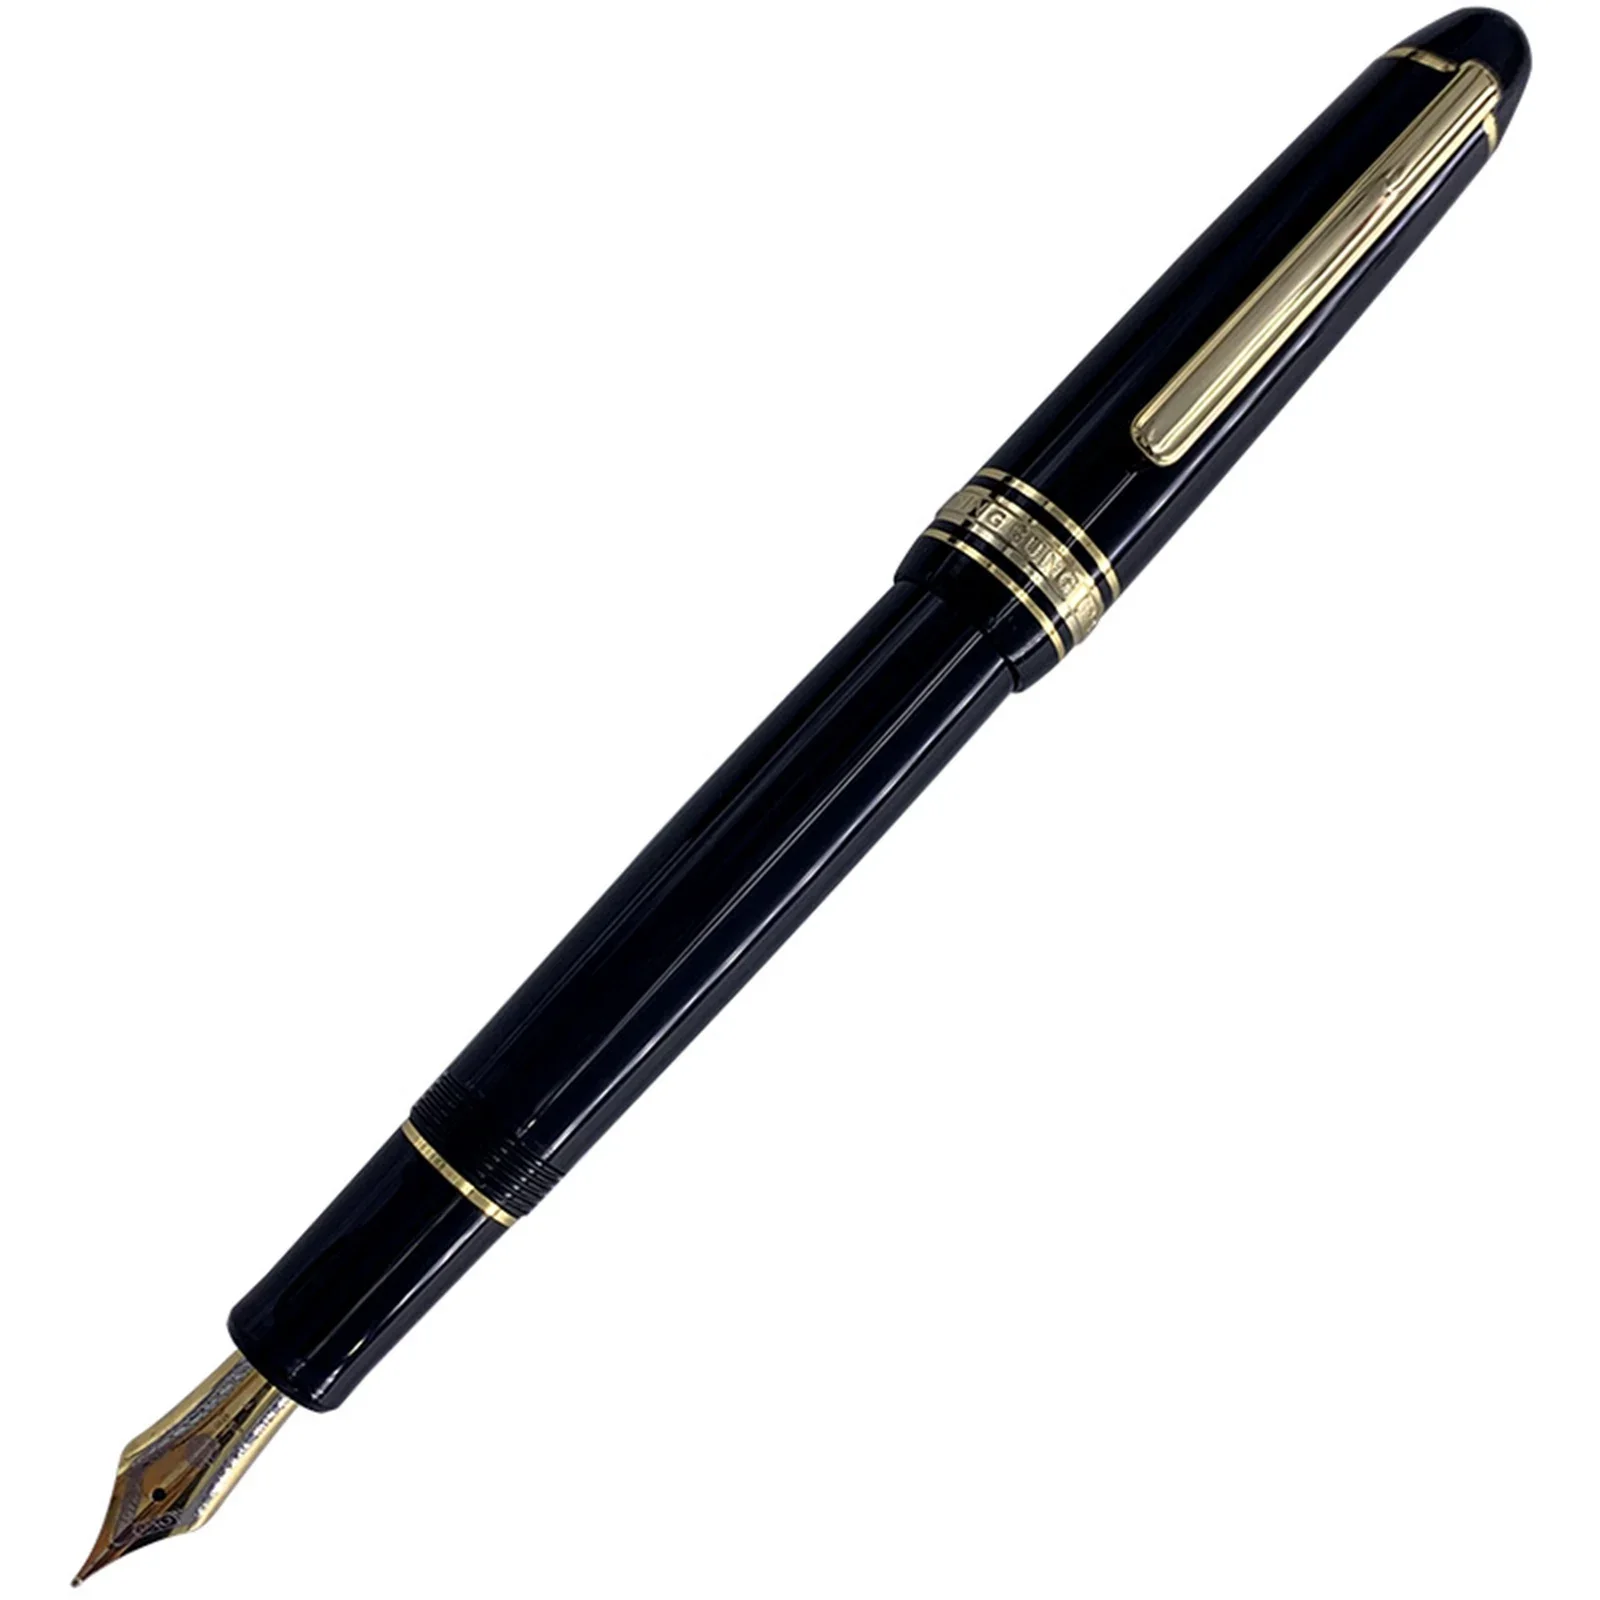 

Yong Sheng 628 F nib Screw Resin Fountain Pen #26 Iridium Nib Ink Pens Calligraphy Practice Writing Business Office Pen gifts